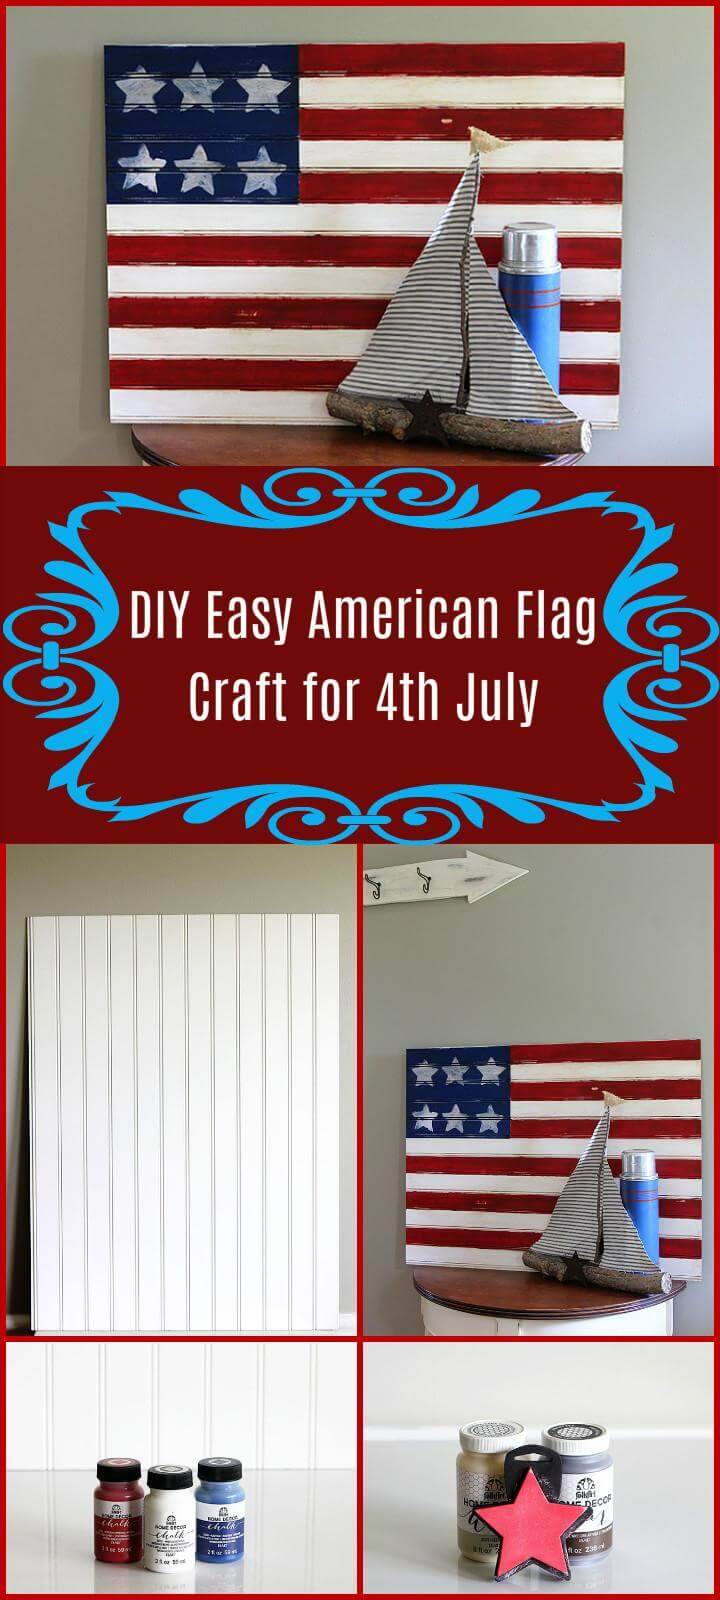 DIY Easy American flag craft for 4th July